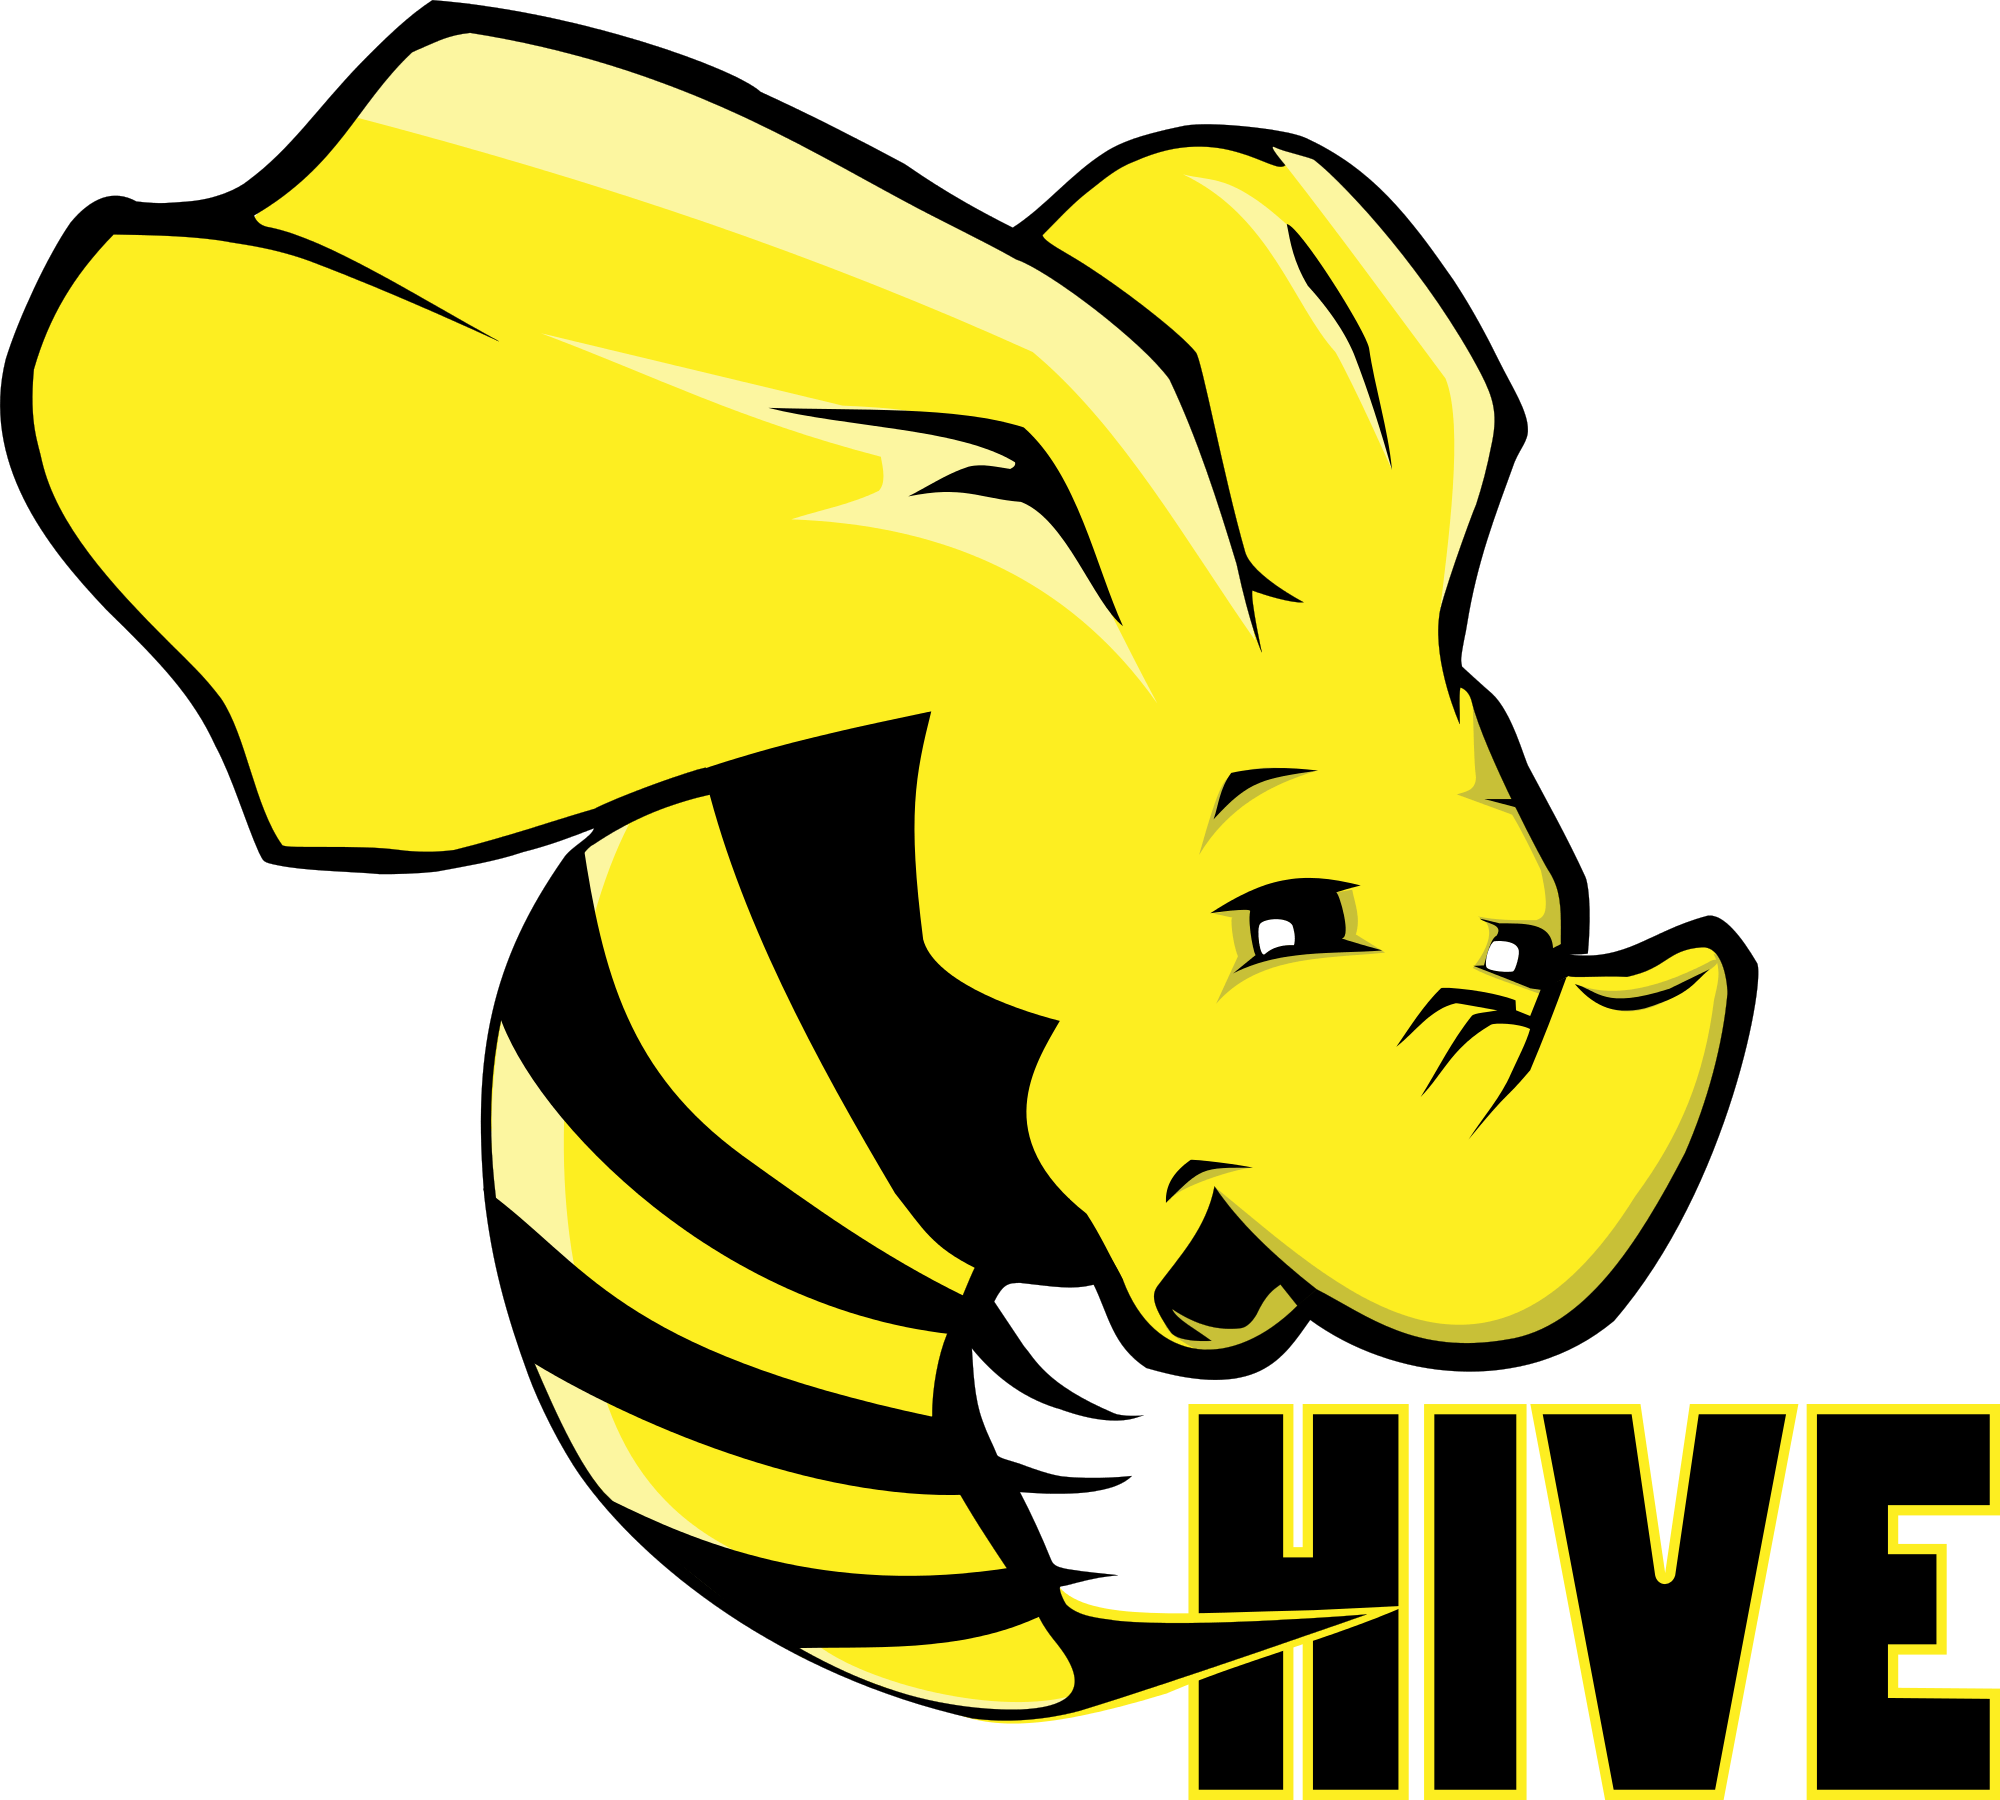 Hive Logo - File:Apache Hive logo.svg - Wikimedia Commons